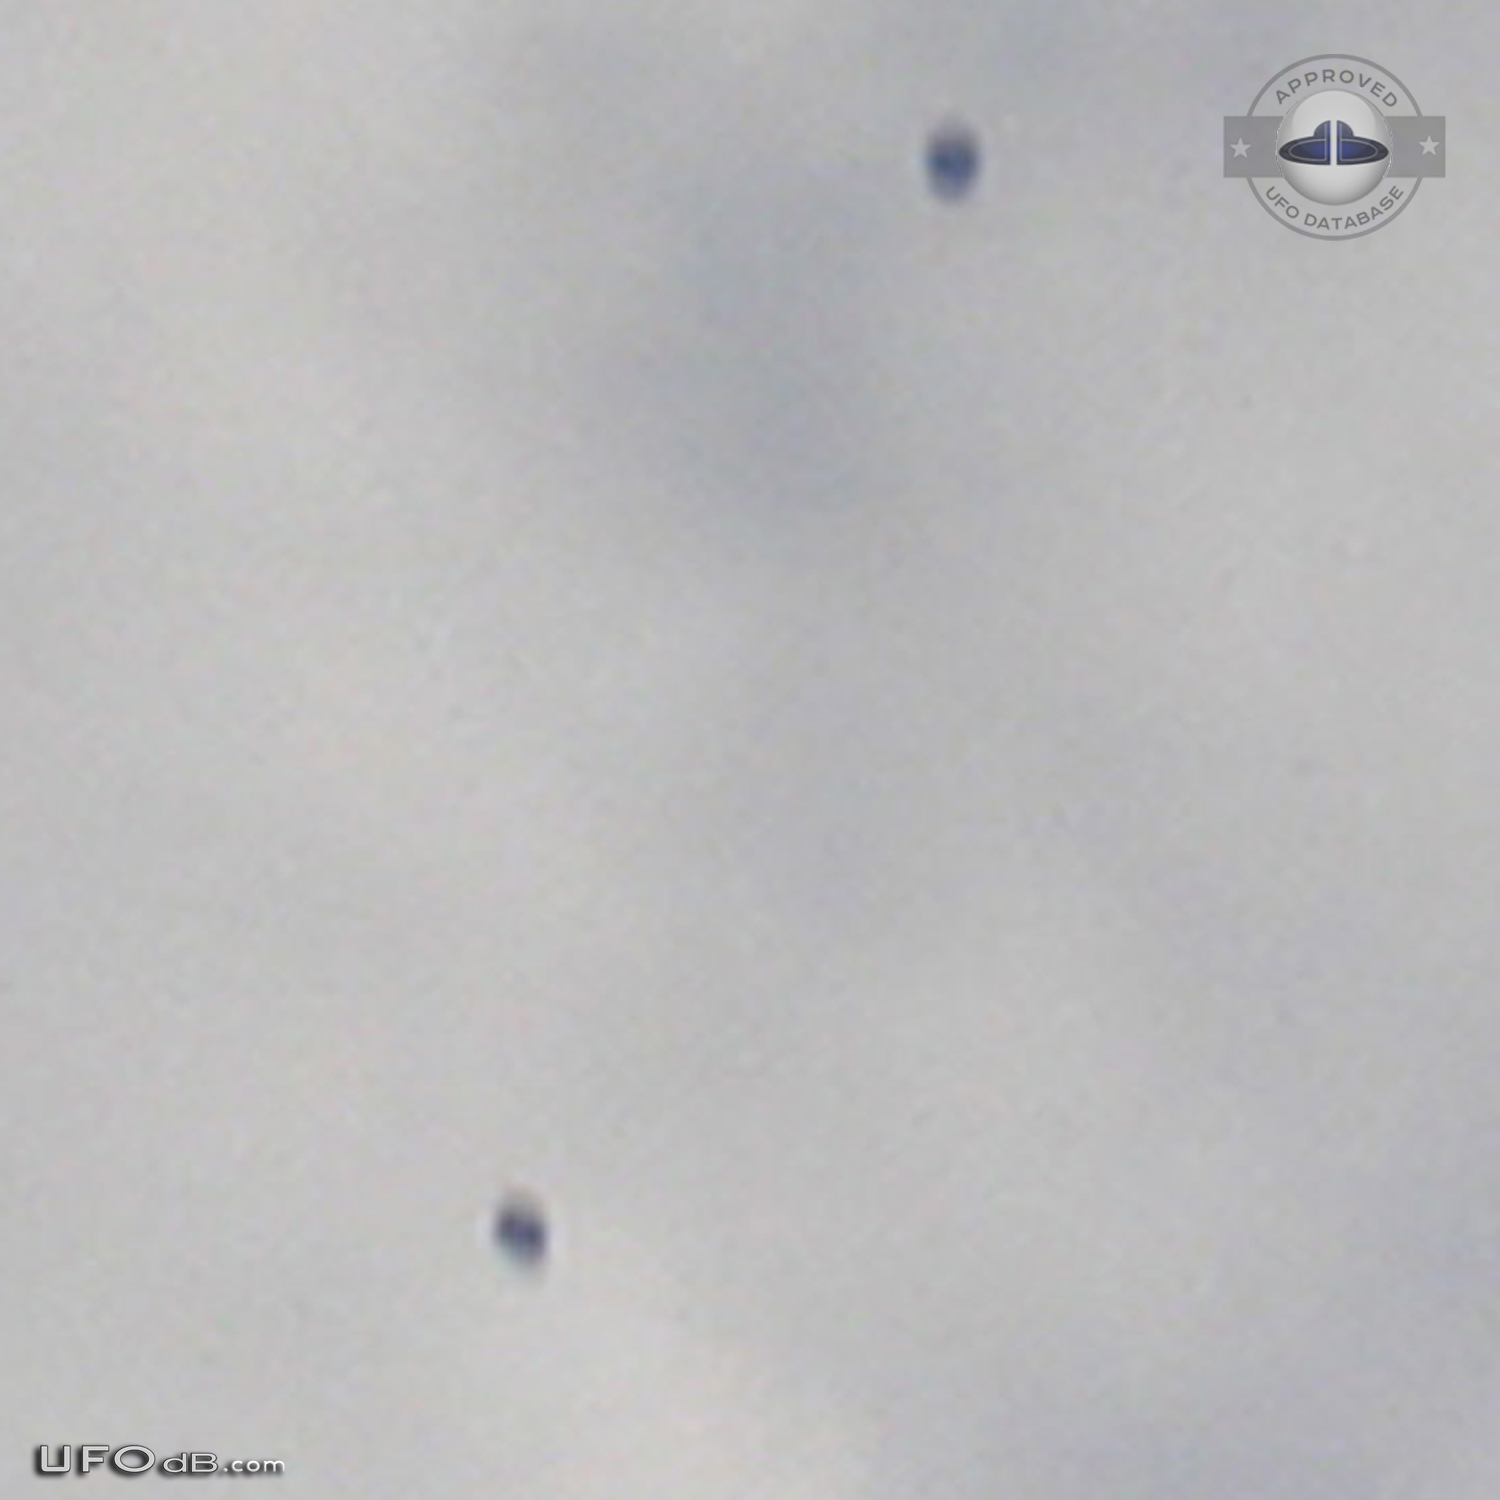 Four grey black disc UFOs near the airplane Mississauga, Ontario 2010 UFO Picture #531-3